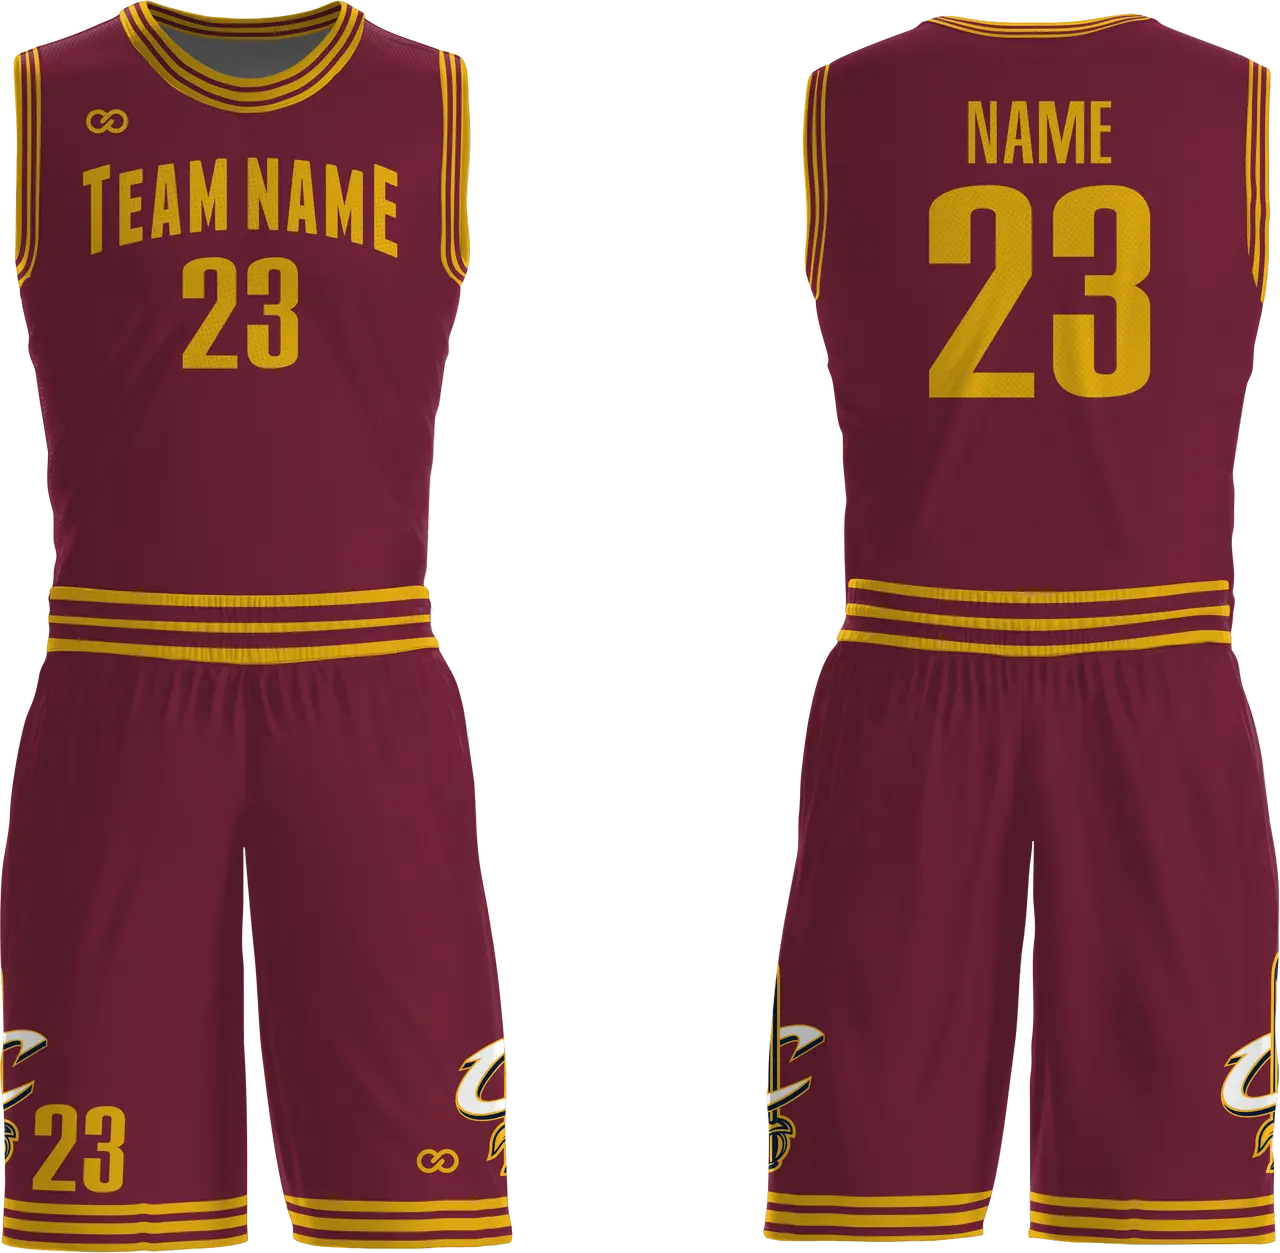 Wholesale Team Basketball Uniforms /Latest fashion Design sublimation basketball uniform